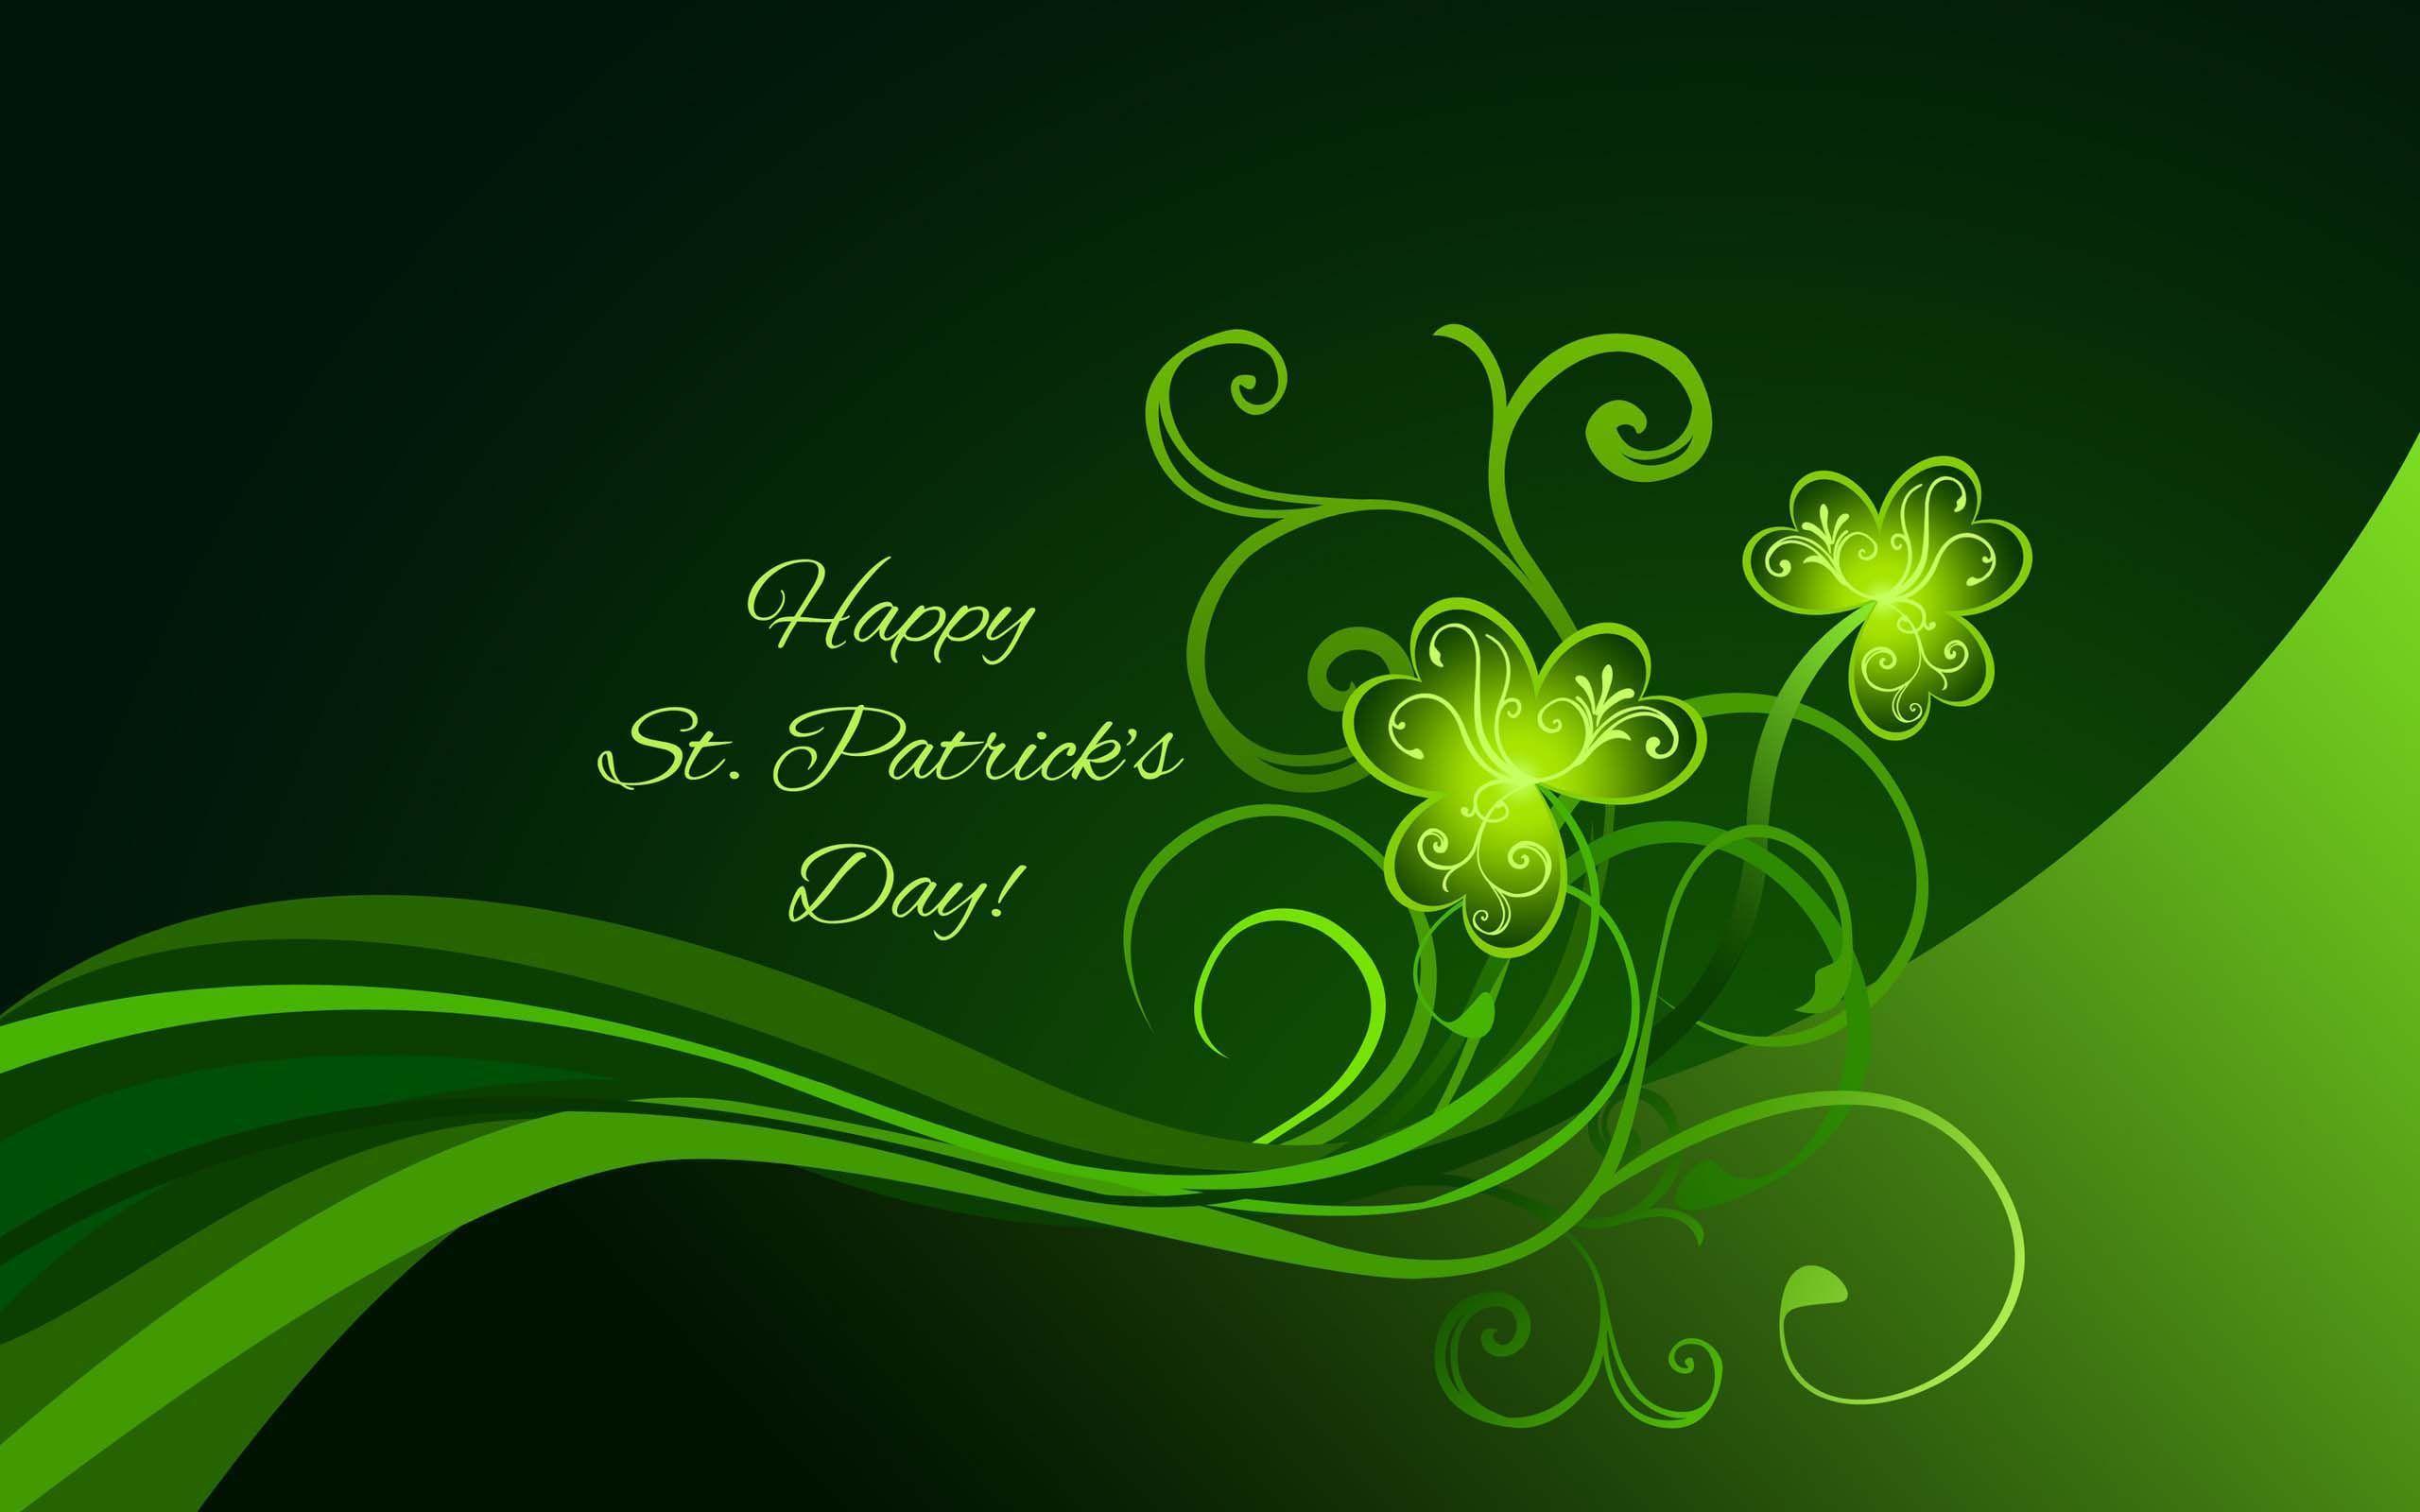 Happy St Patrick's Day PC Wallpaper 2880x1800 PC Wallpaper